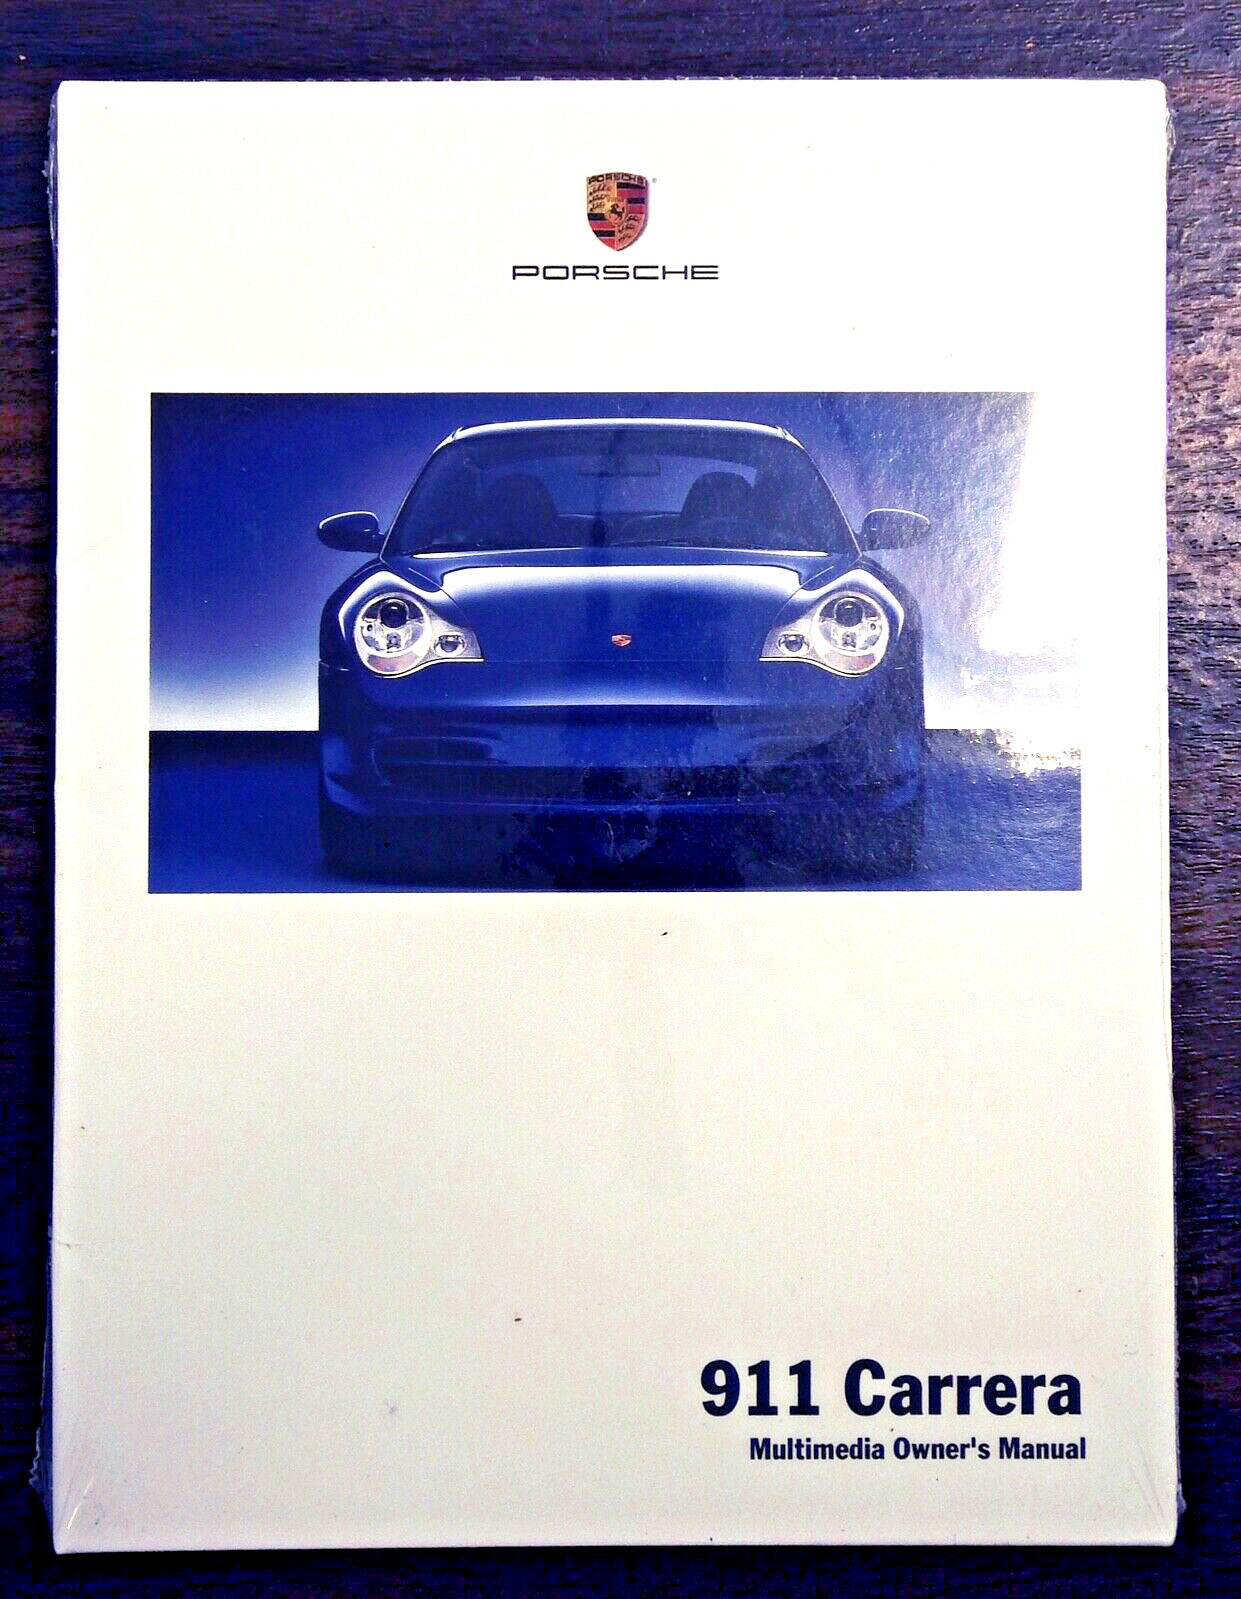 Original 2003 Porsche 911 Carrera Multimedia Owner's Manual DVD. New. Sealed.